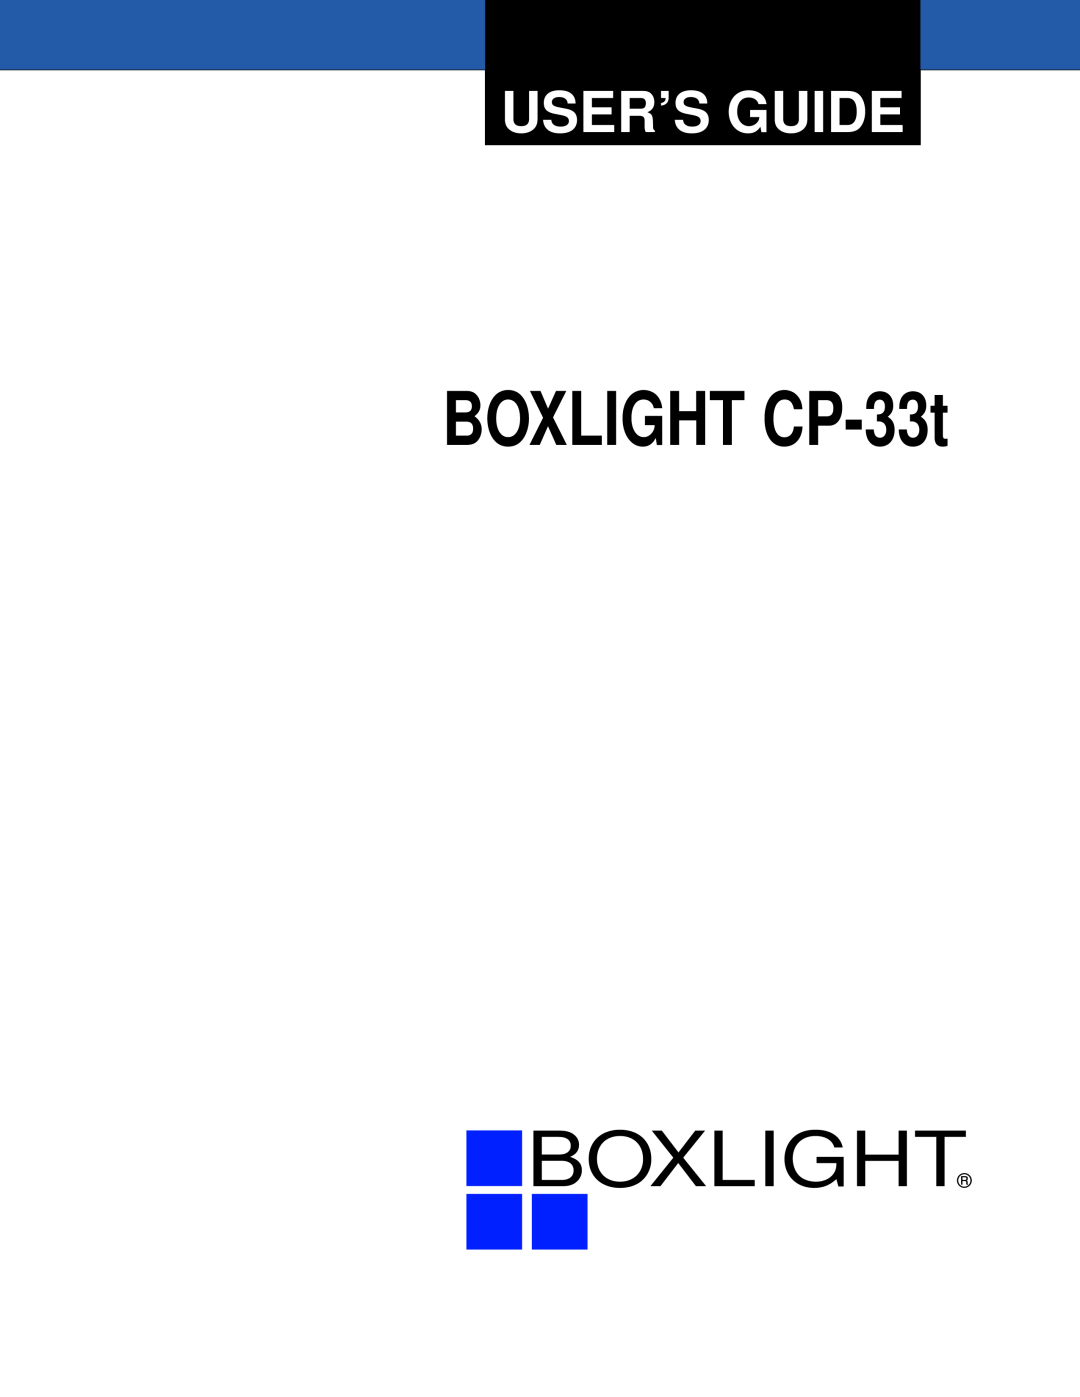 BOXLIGHT manual Boxlight, BOXLIGHT CP-33t, User’S Guide 